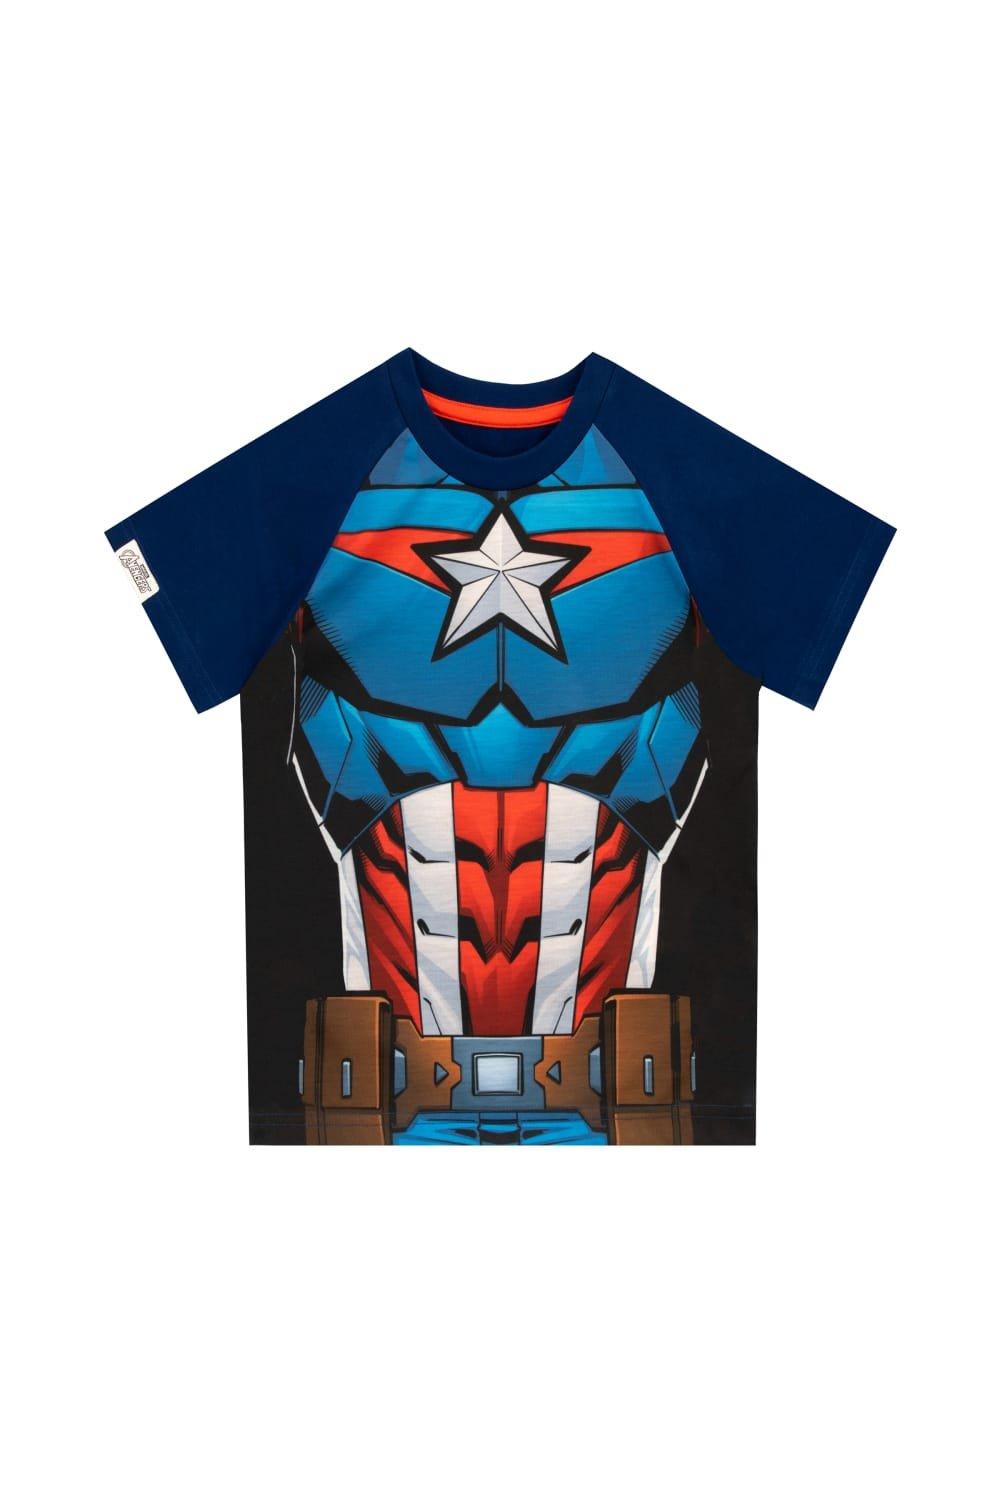 Captain America Dress Up T-Shirt